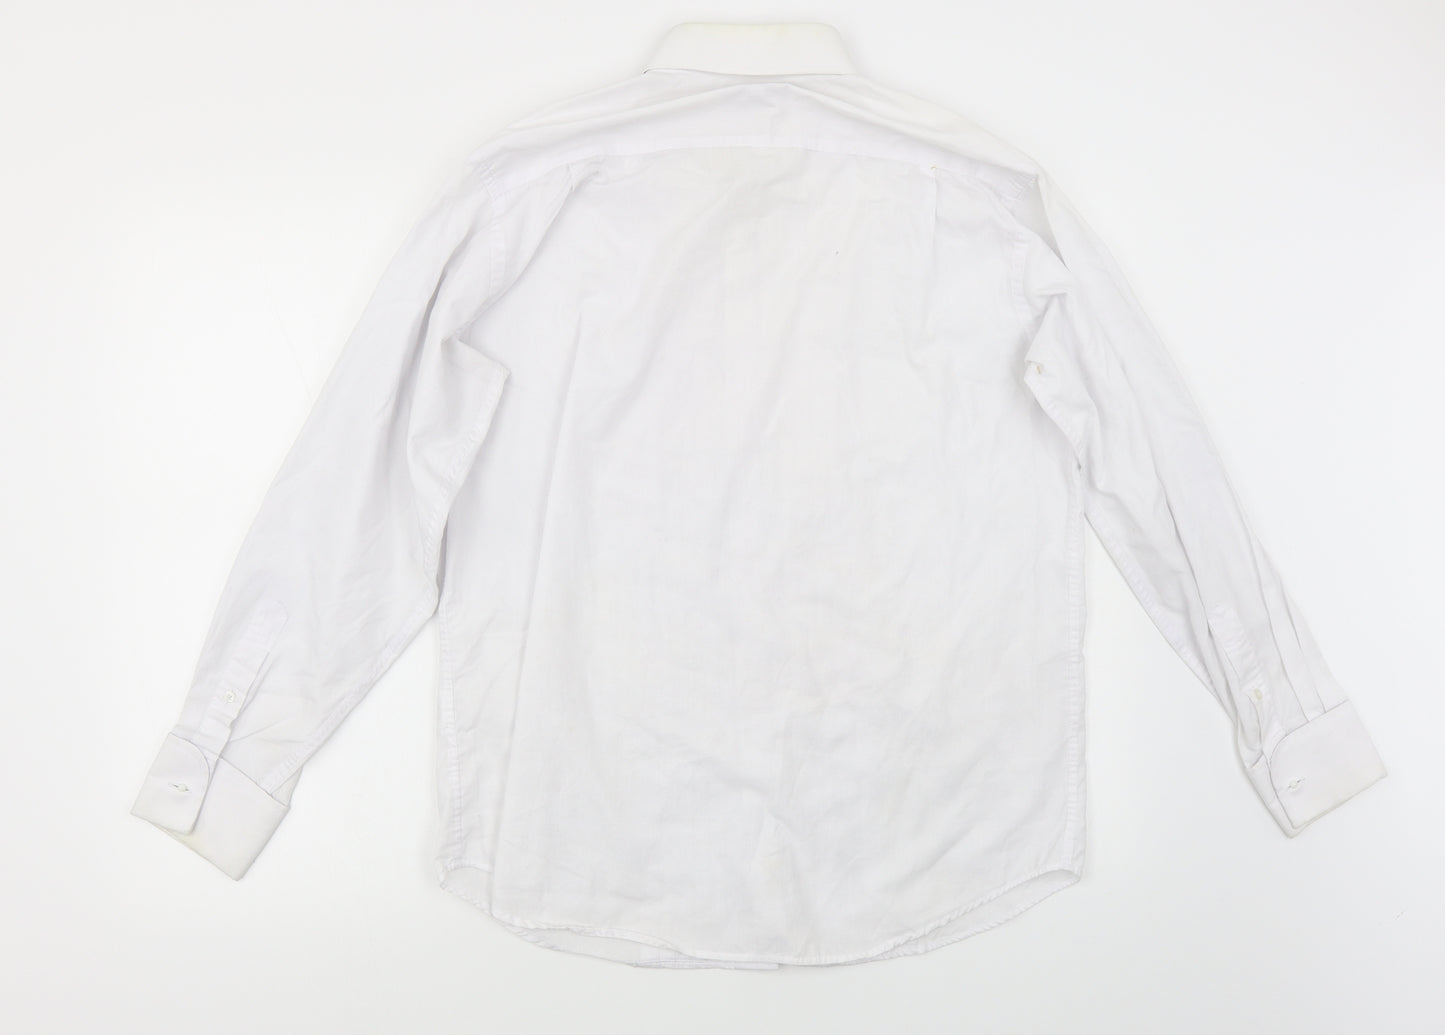 Michael Sons of London Mens White    Dress Shirt Size 15.5